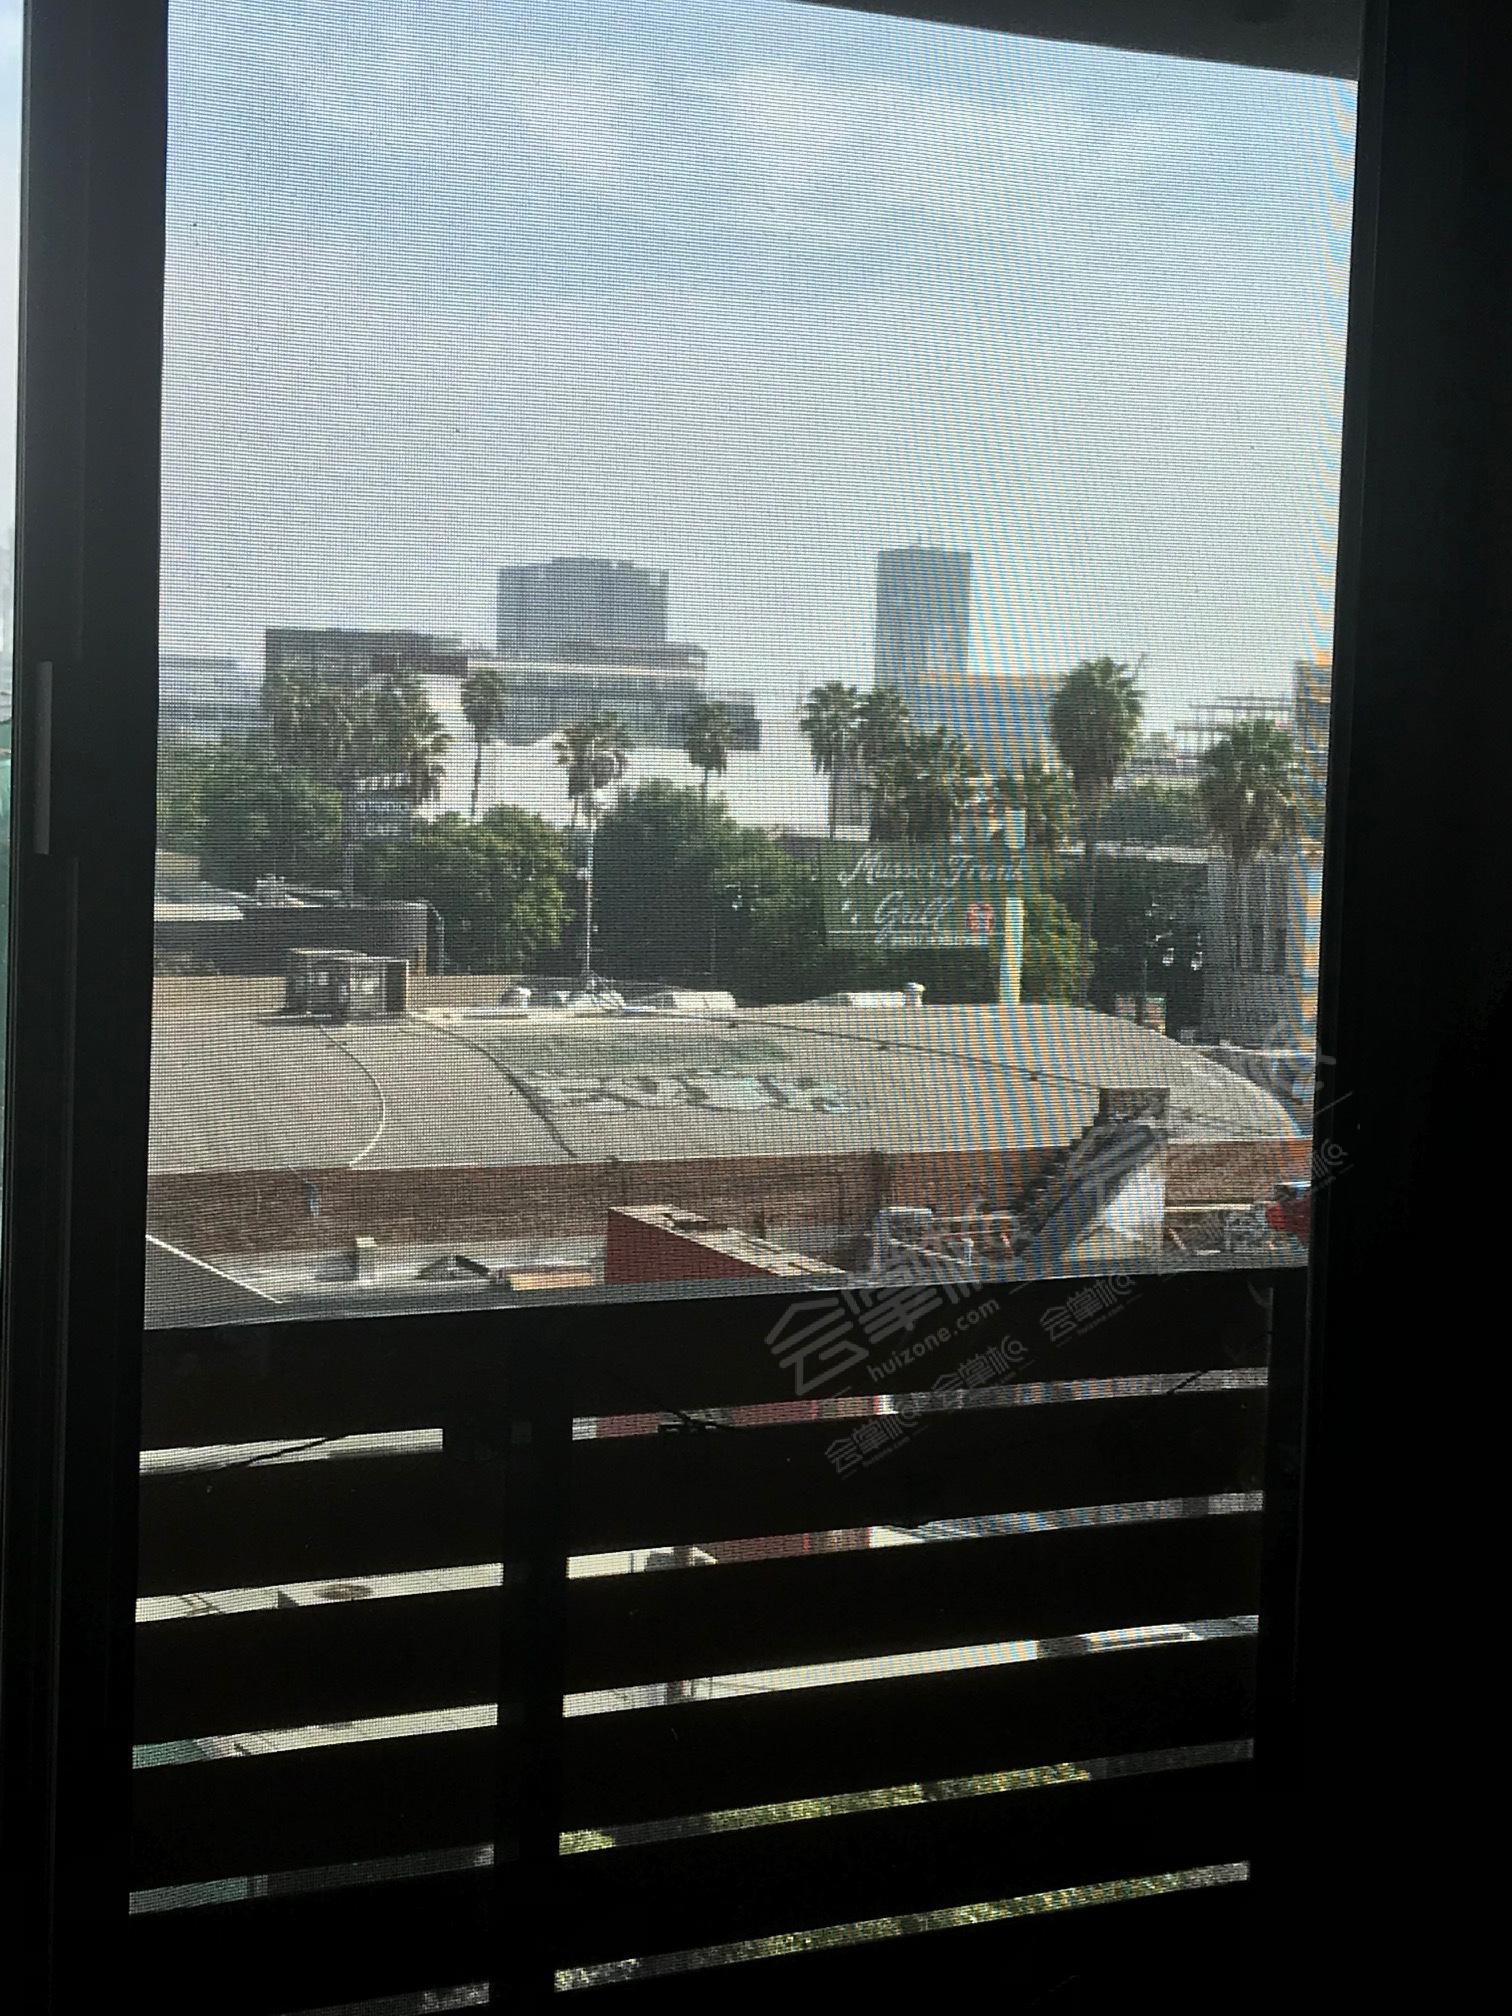 Two-story Penthouse Loft Overlooking LA